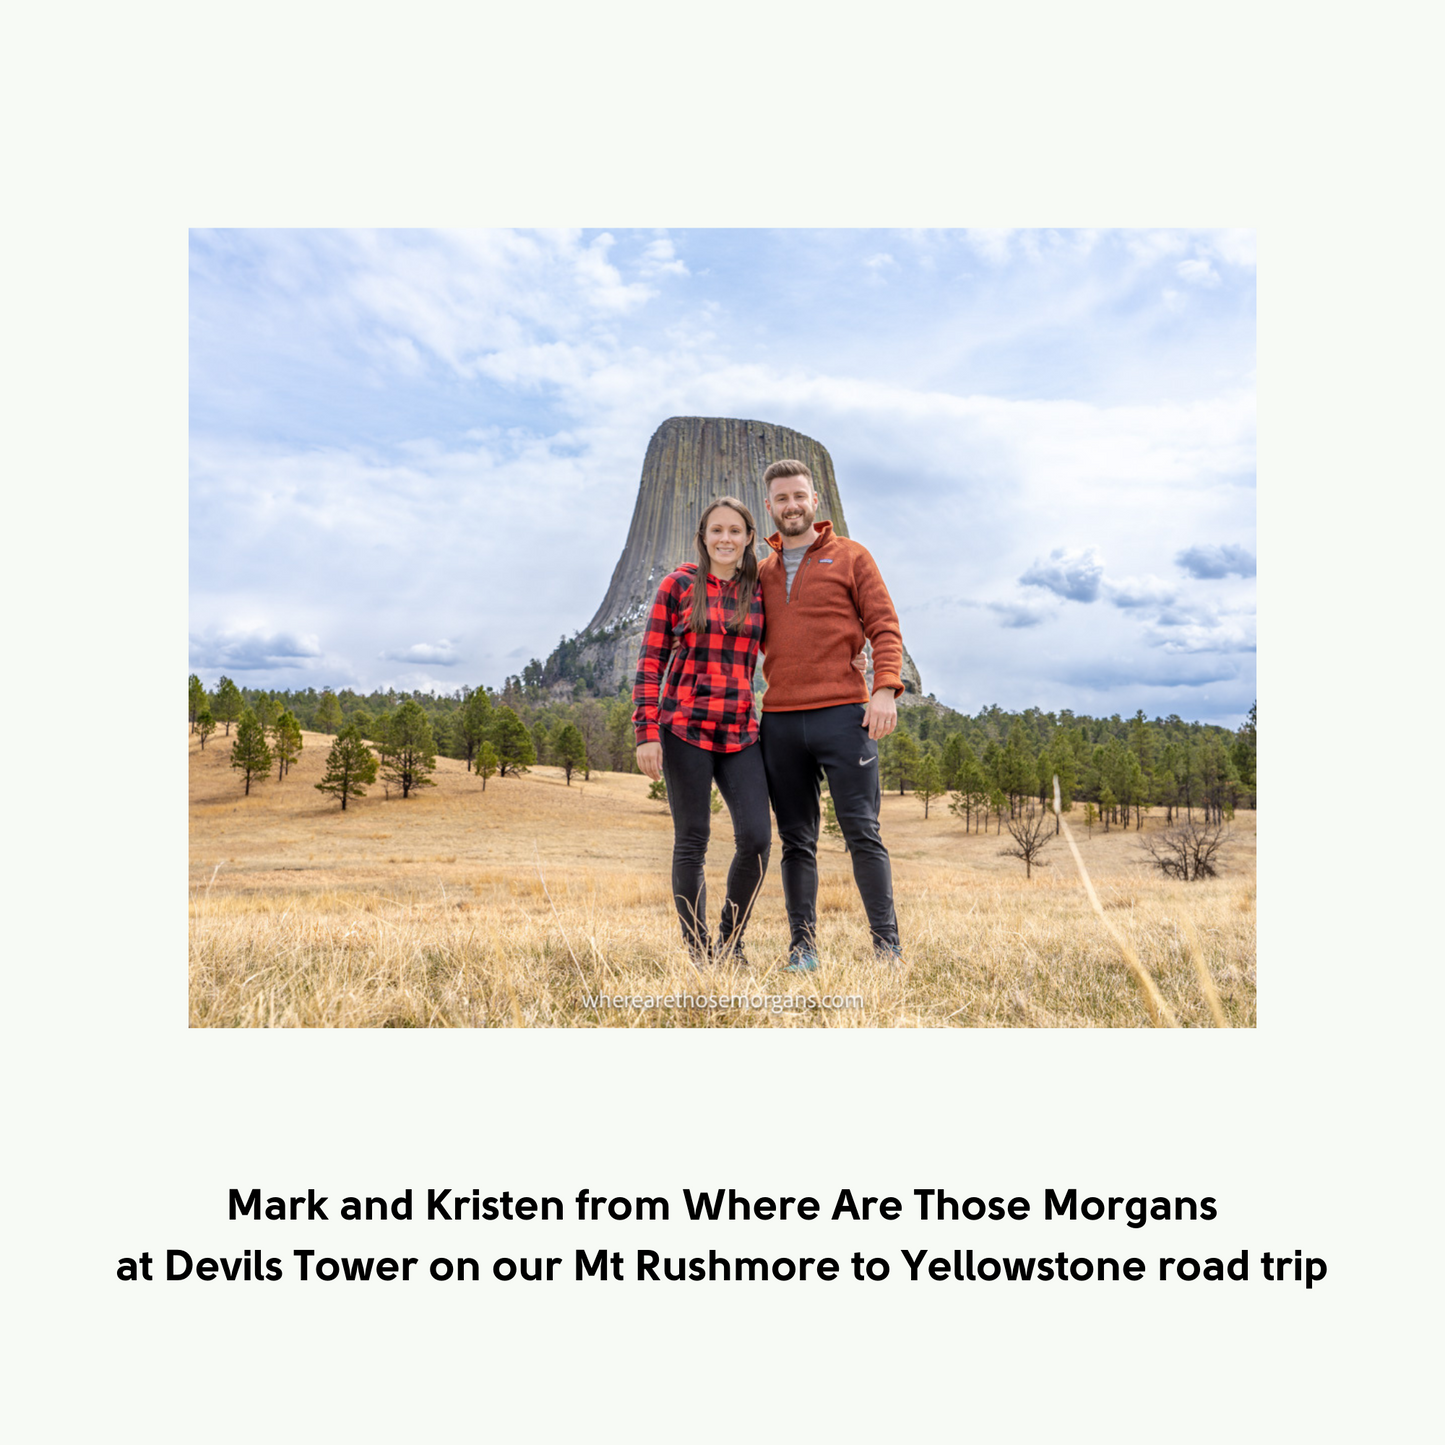 Mount Rushmore To Yellowstone Road Trip Itinerary